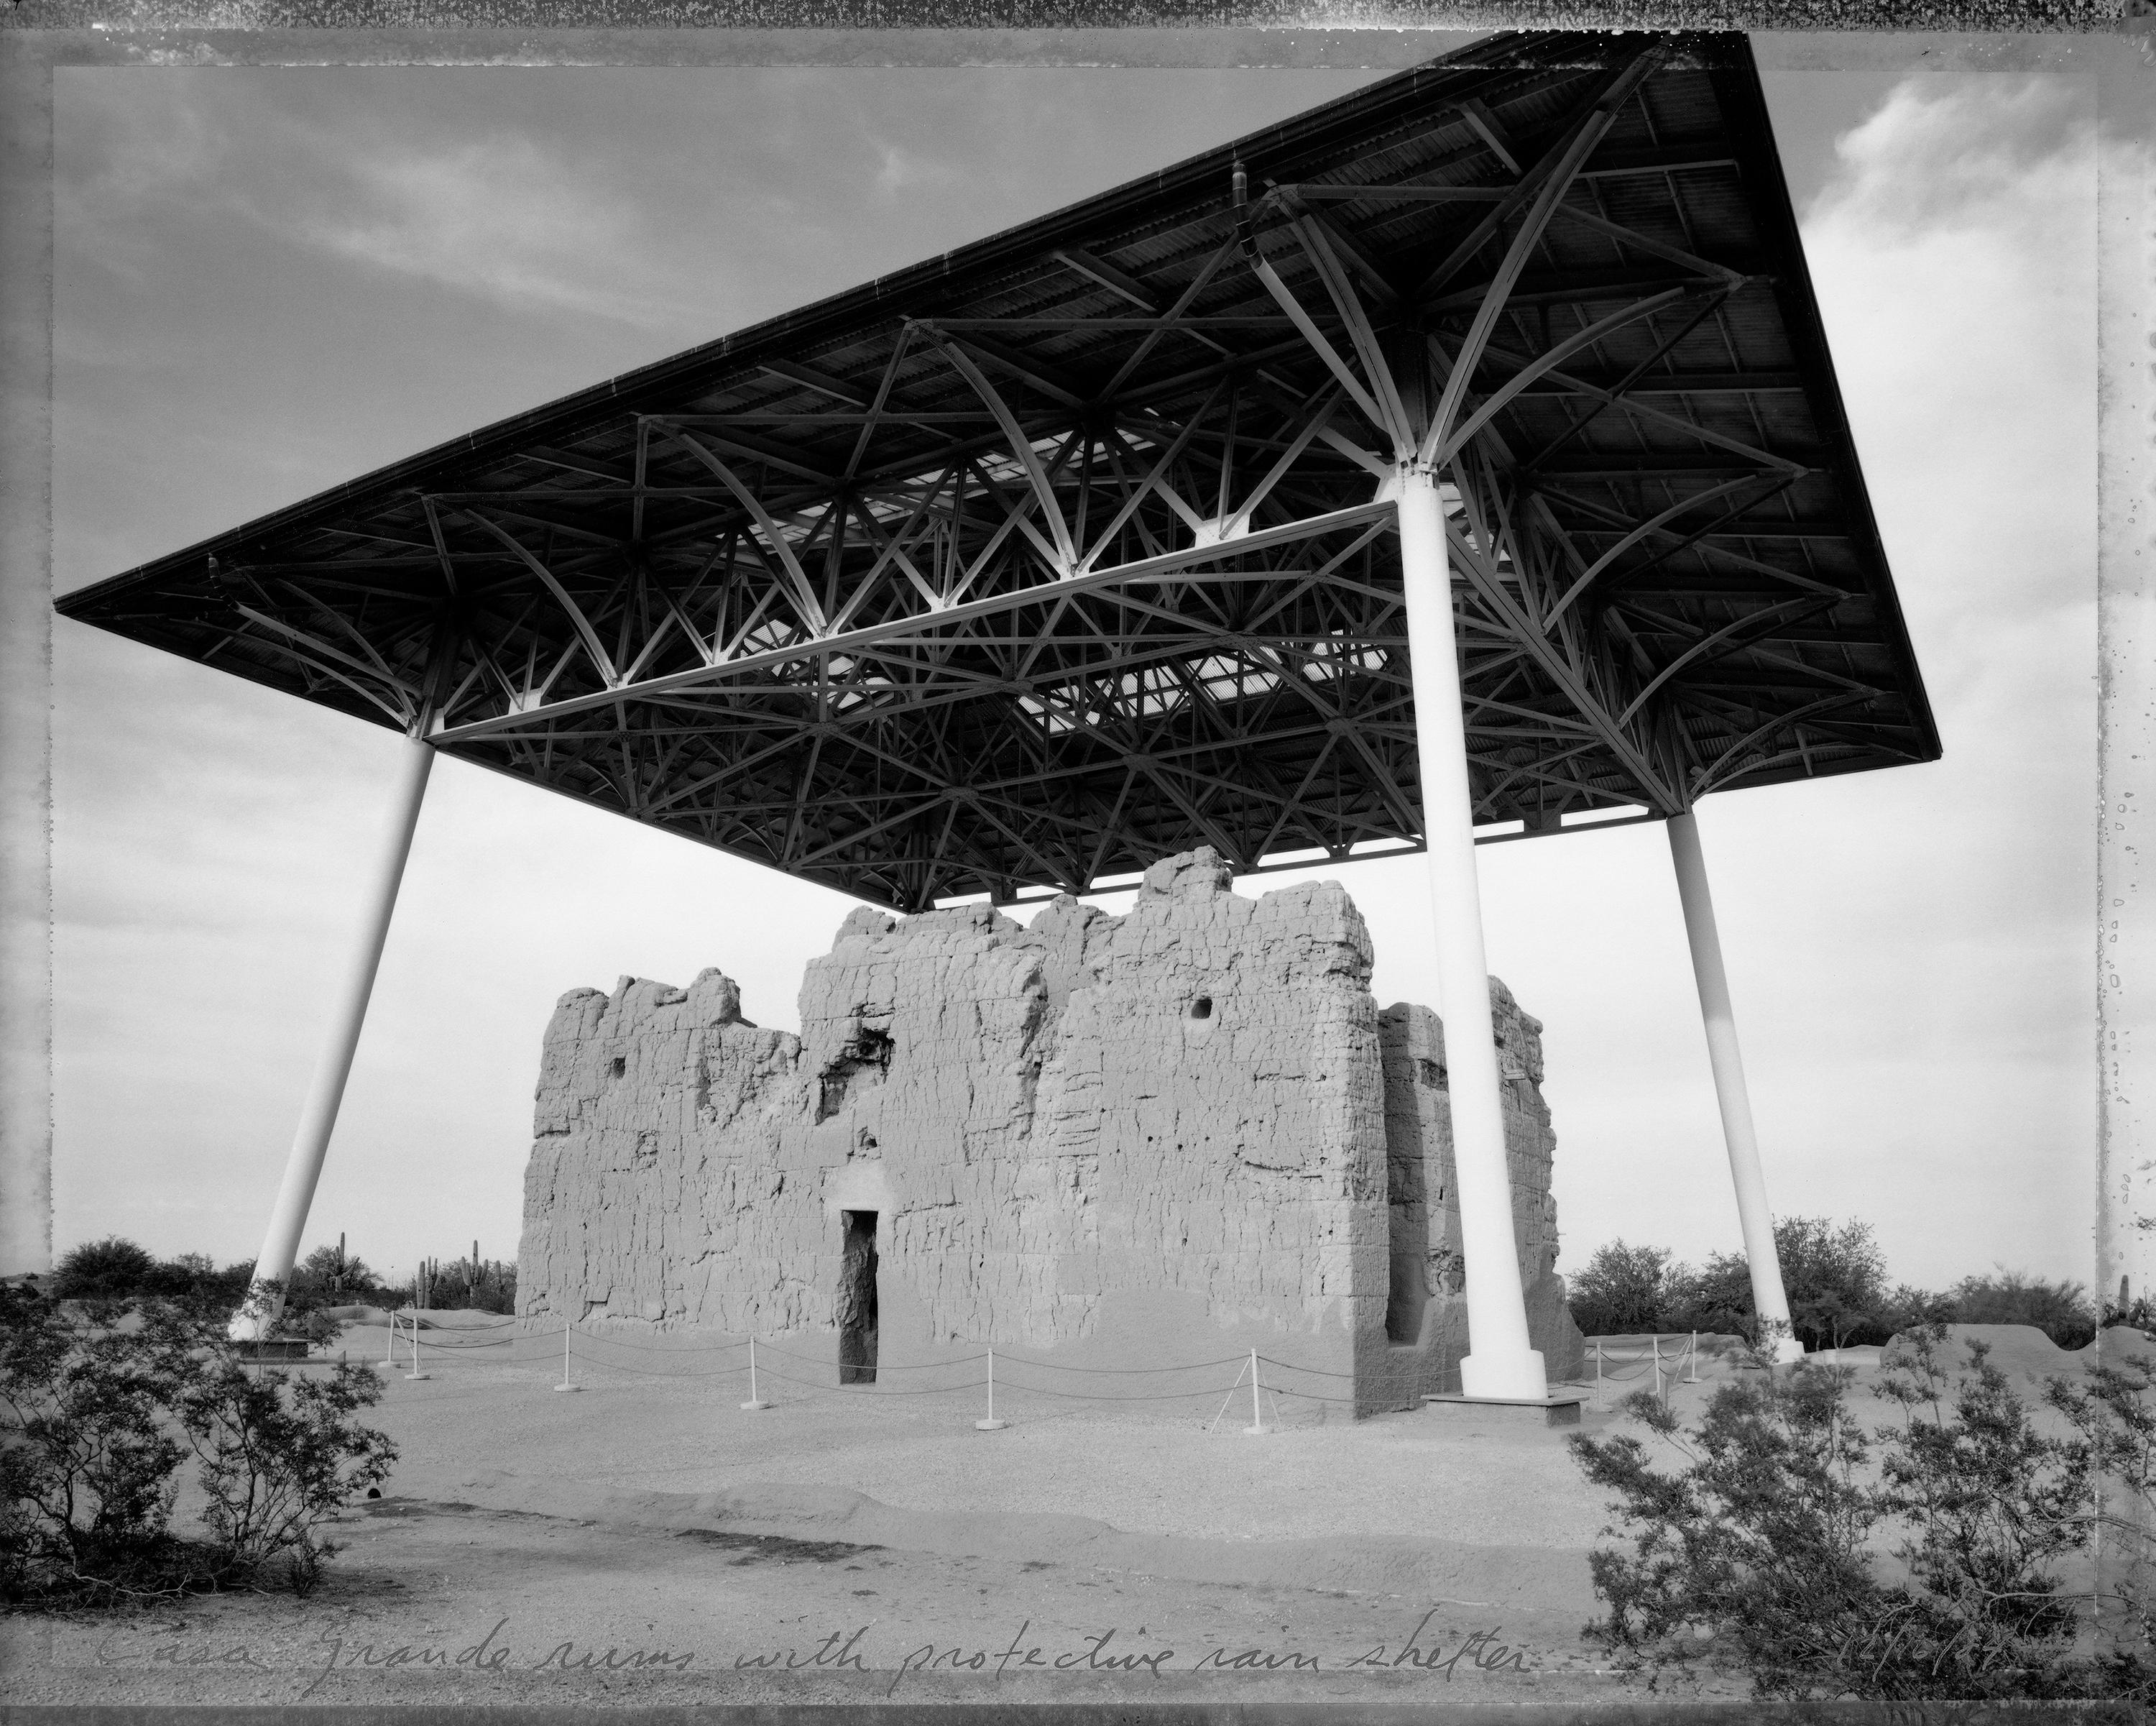 Mark Klett Black and White Photograph - Casa Grande ruins with protective rain shelter, 12/16/84 